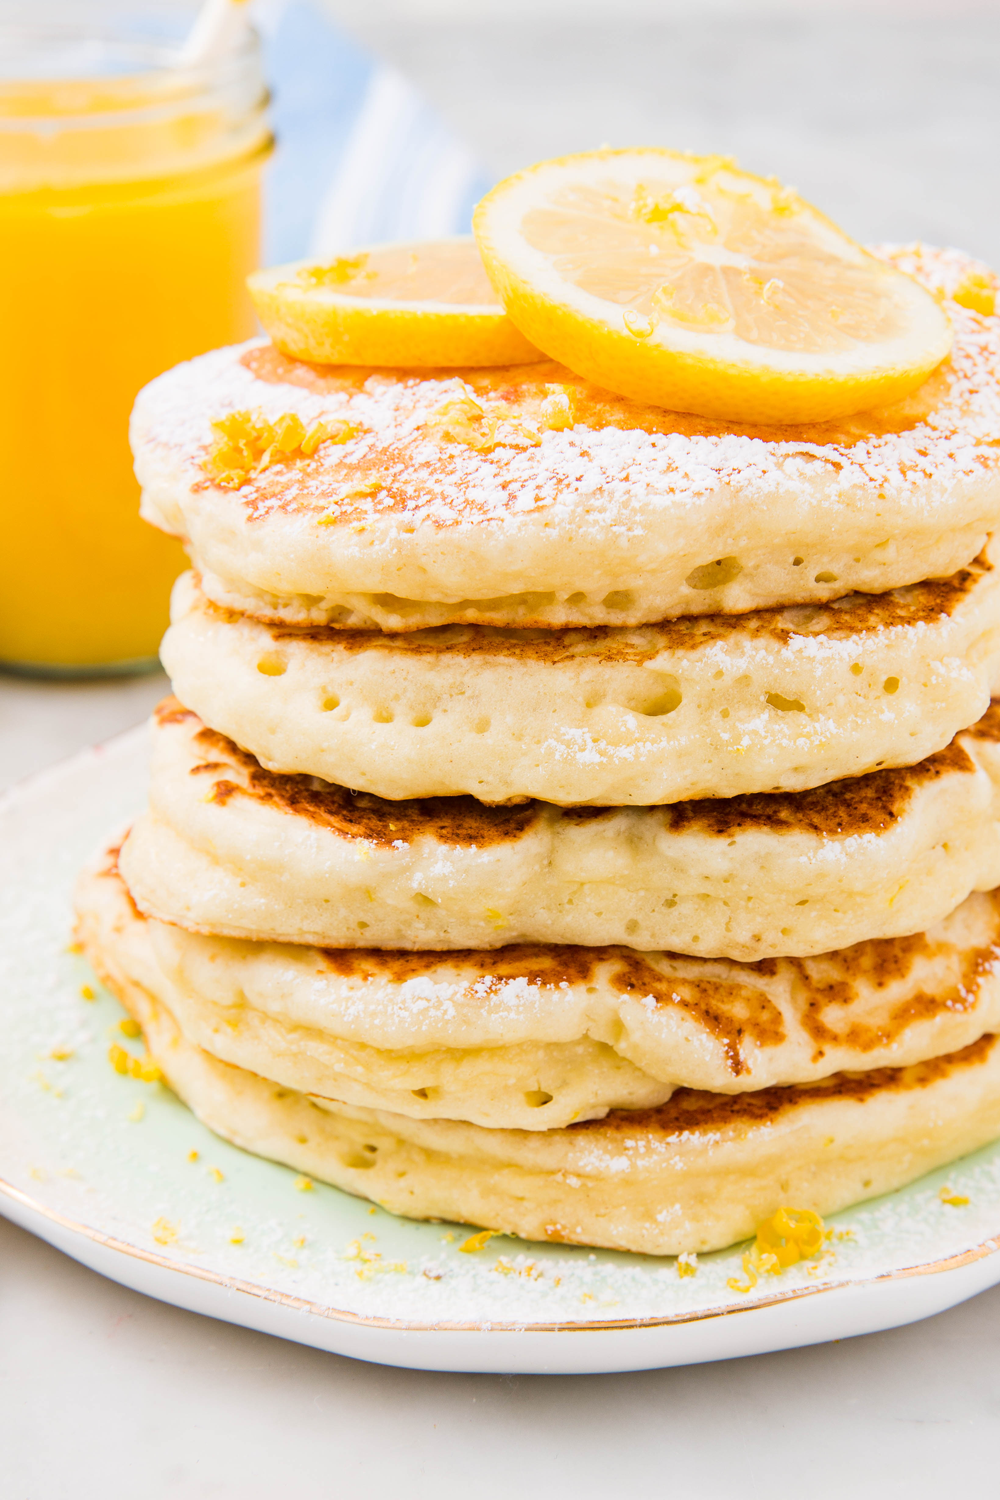 Best Ricotta Pancakes Recipe - How To Make Lemon Ricotta Pancakes